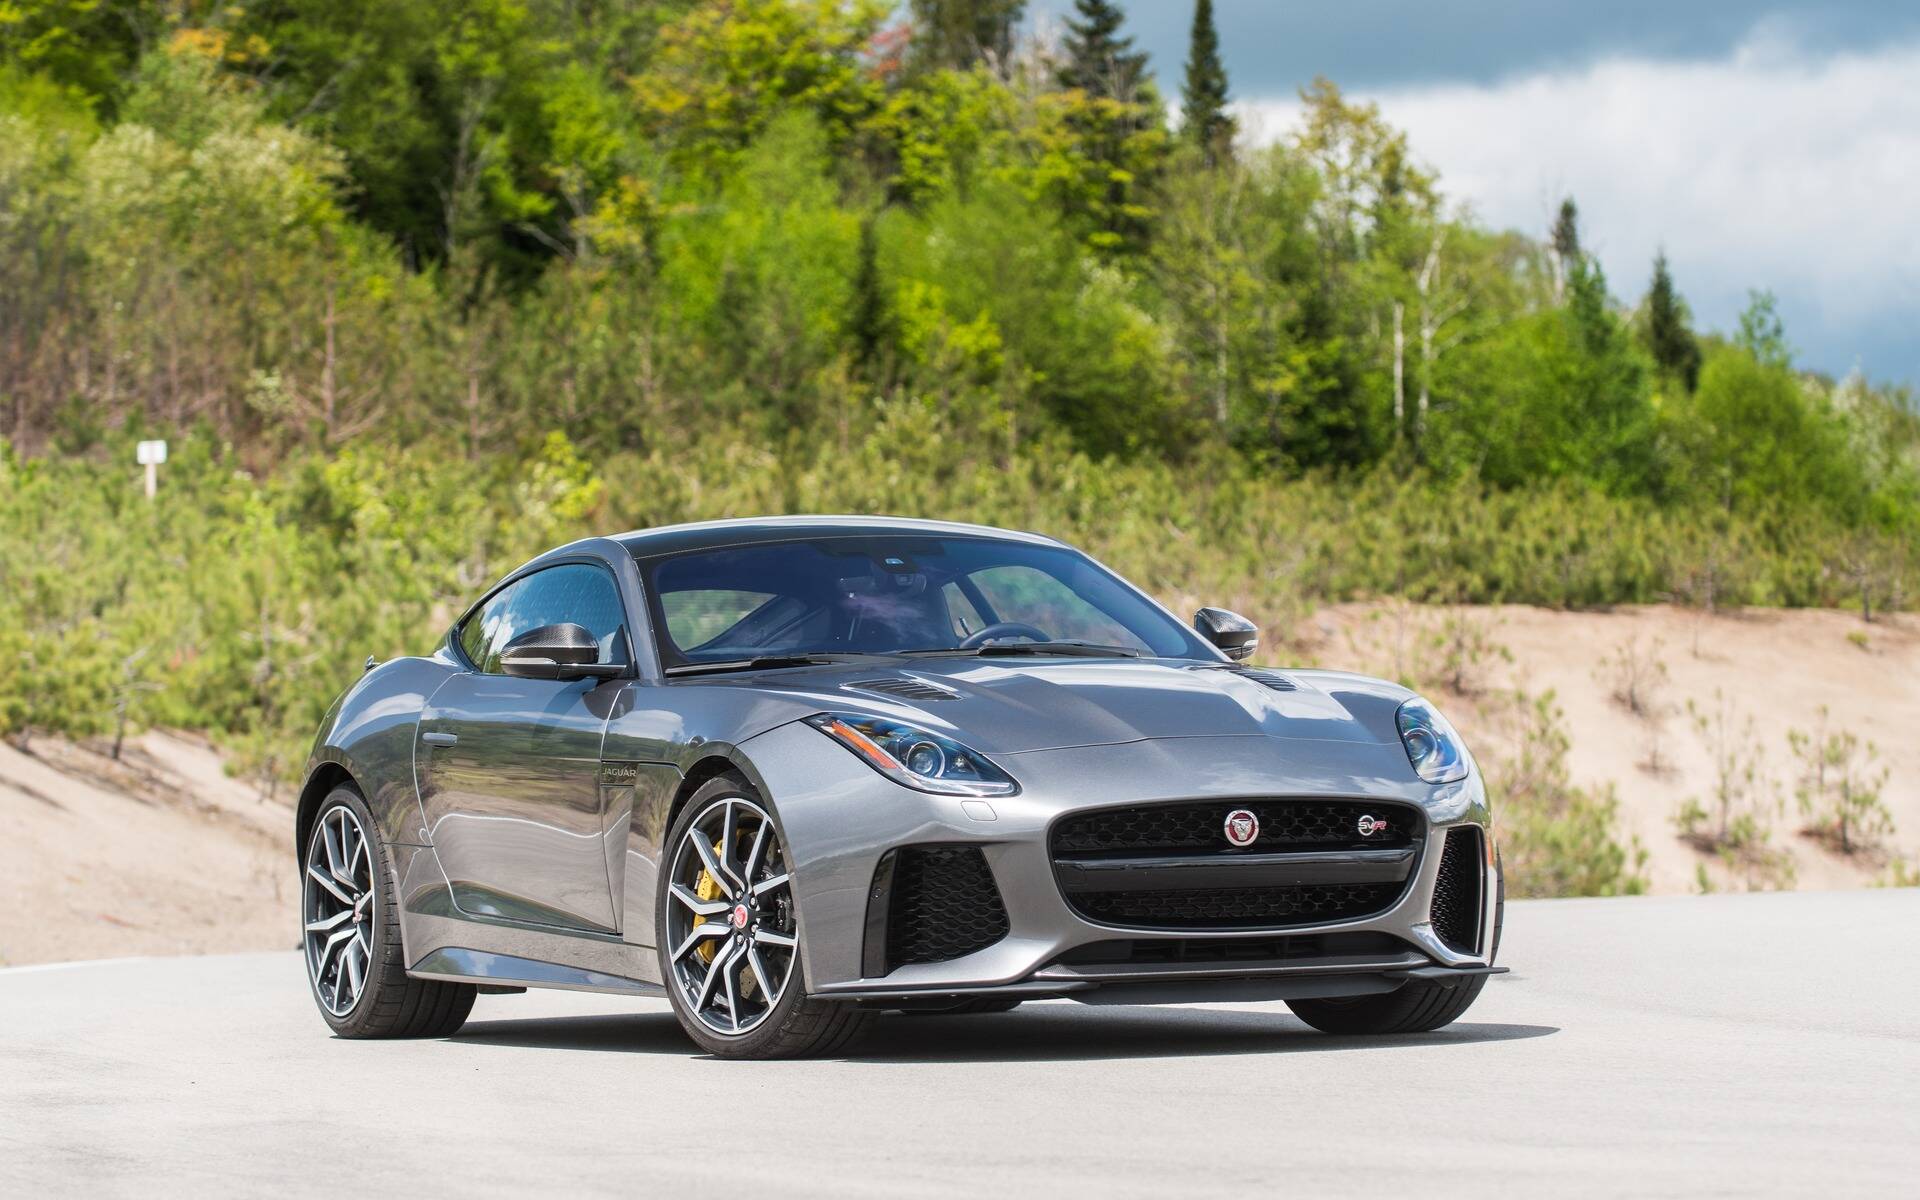 Is Jaguar's Reliability That bad? - The Car Guide